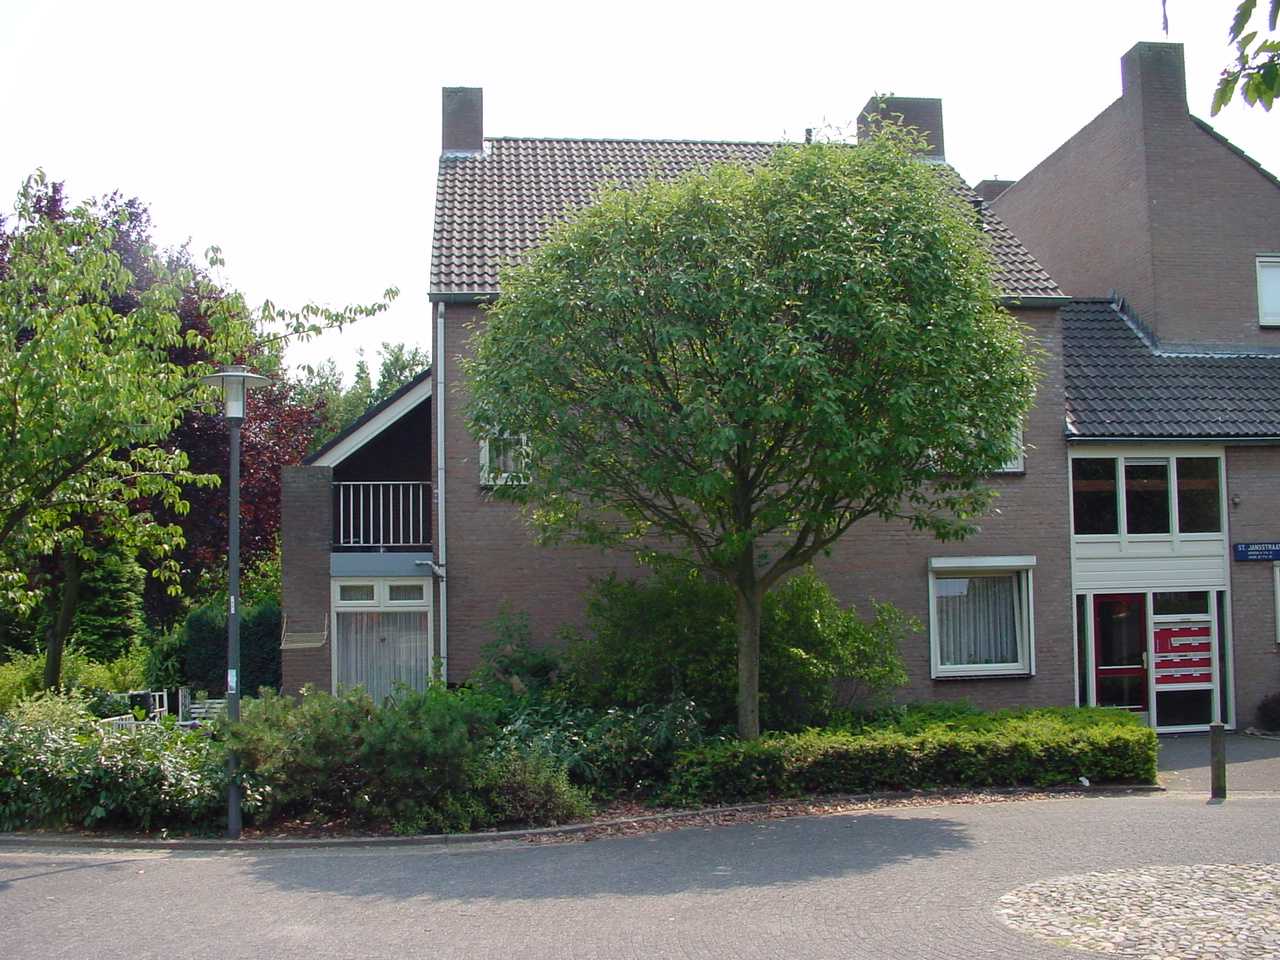 Sint Jansstraat 23, 6071 JG Swalmen, Nederland